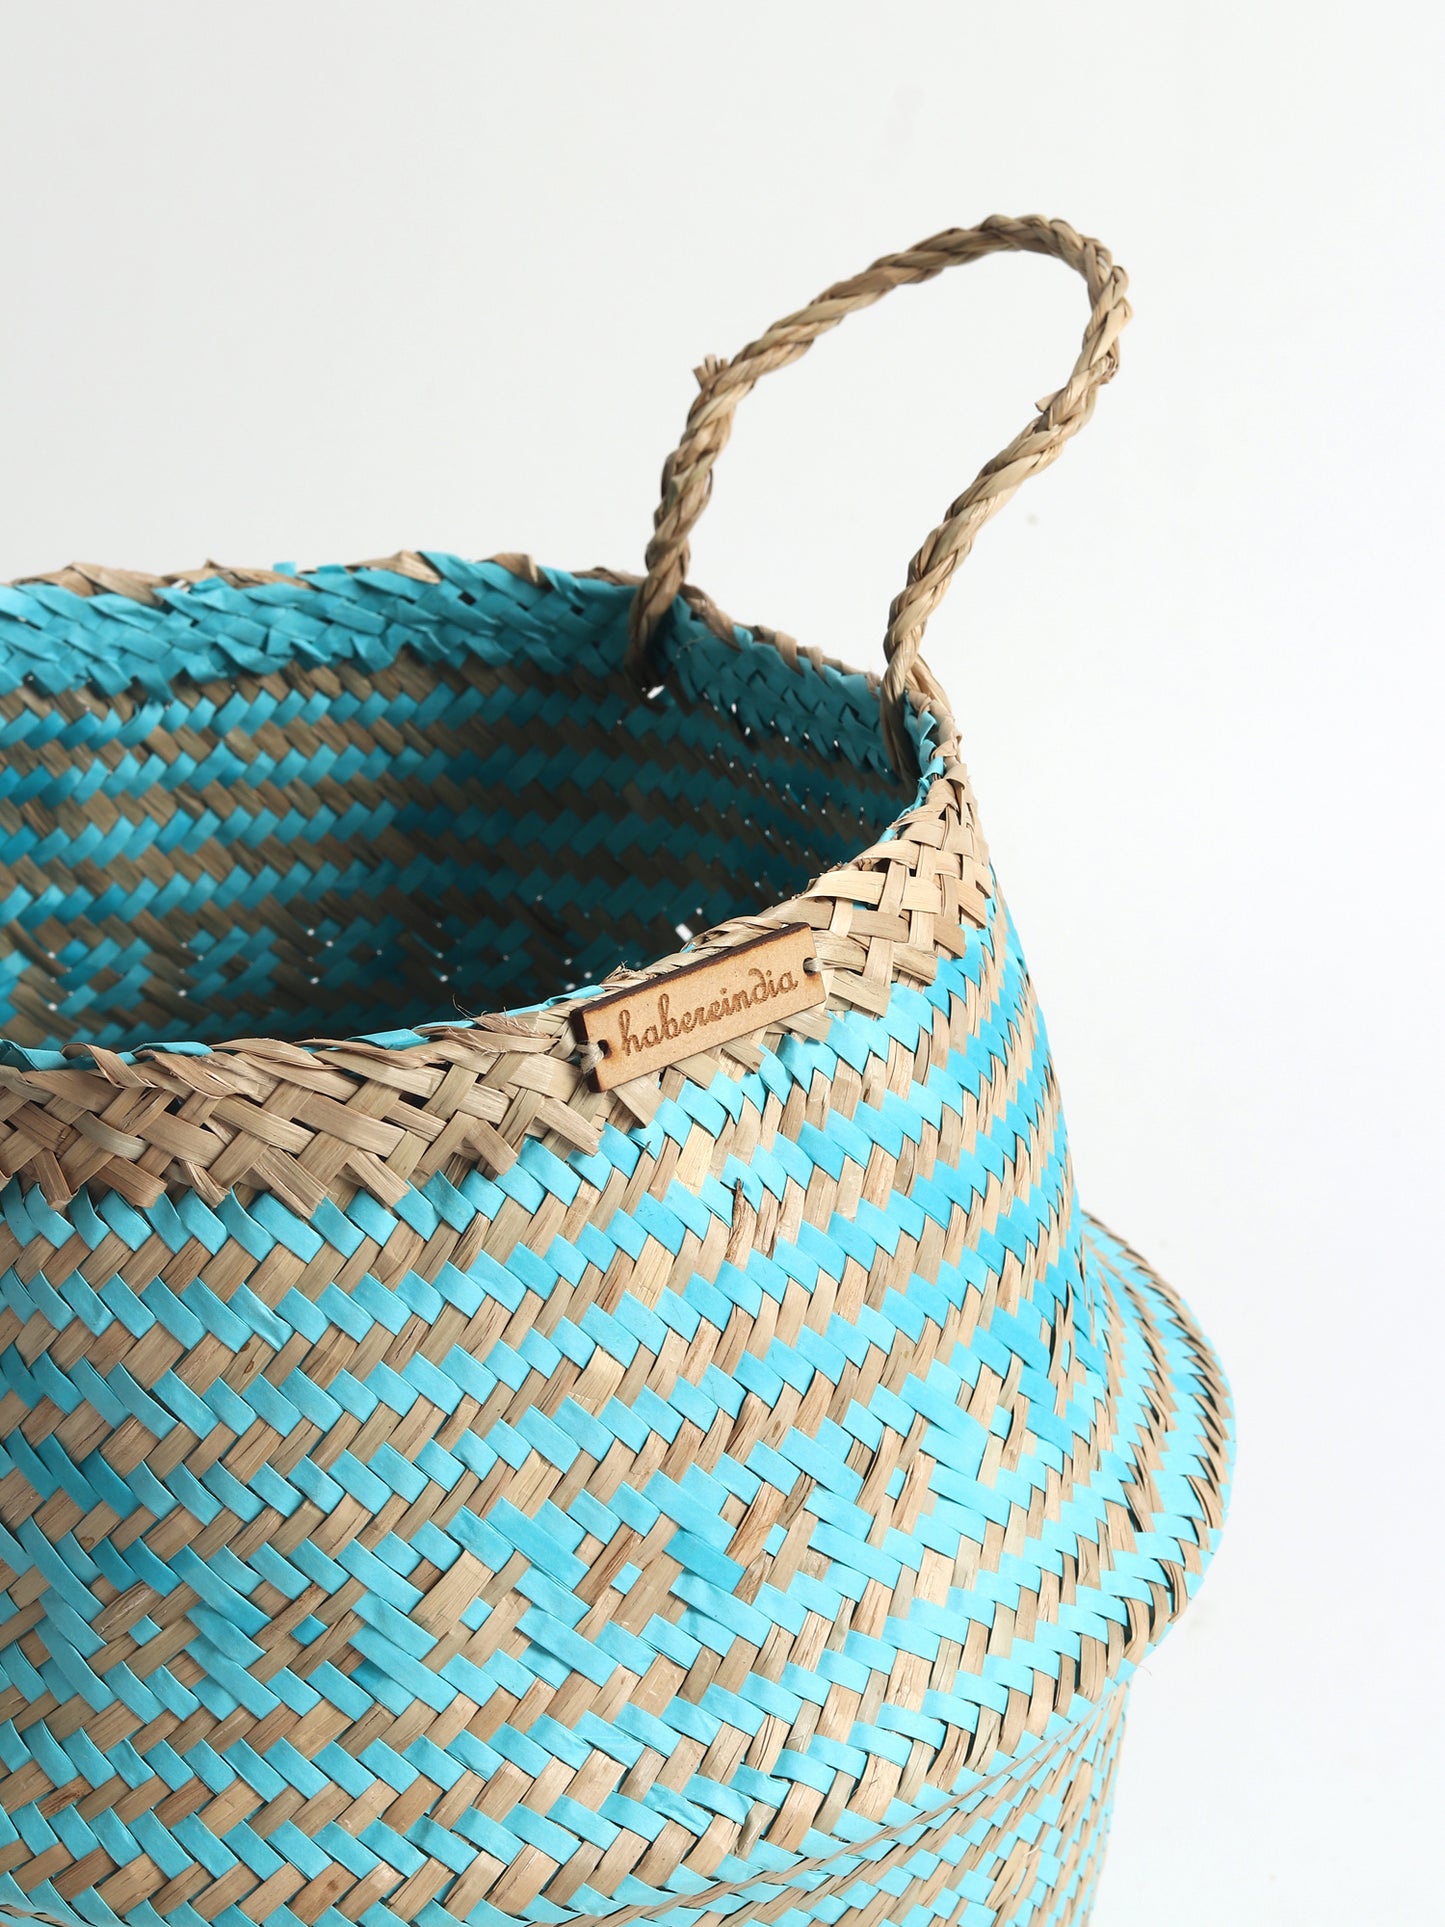 Seagrass Plant & Storage Baskets - Blue